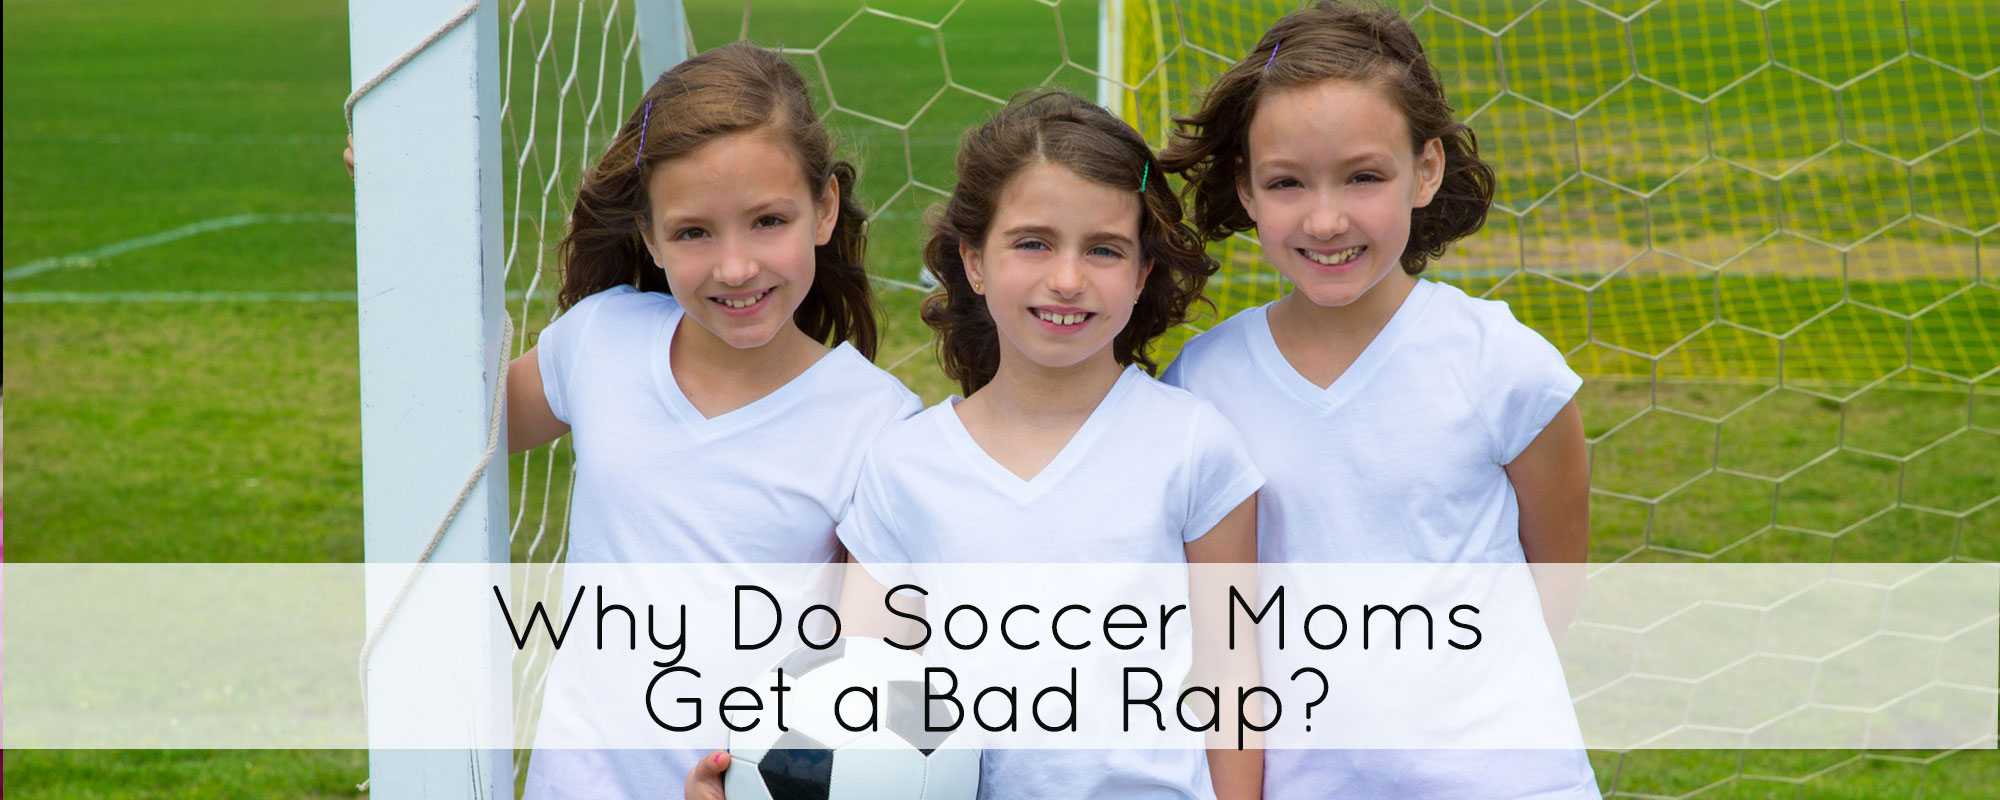 Why do soccer moms get a bad rap?